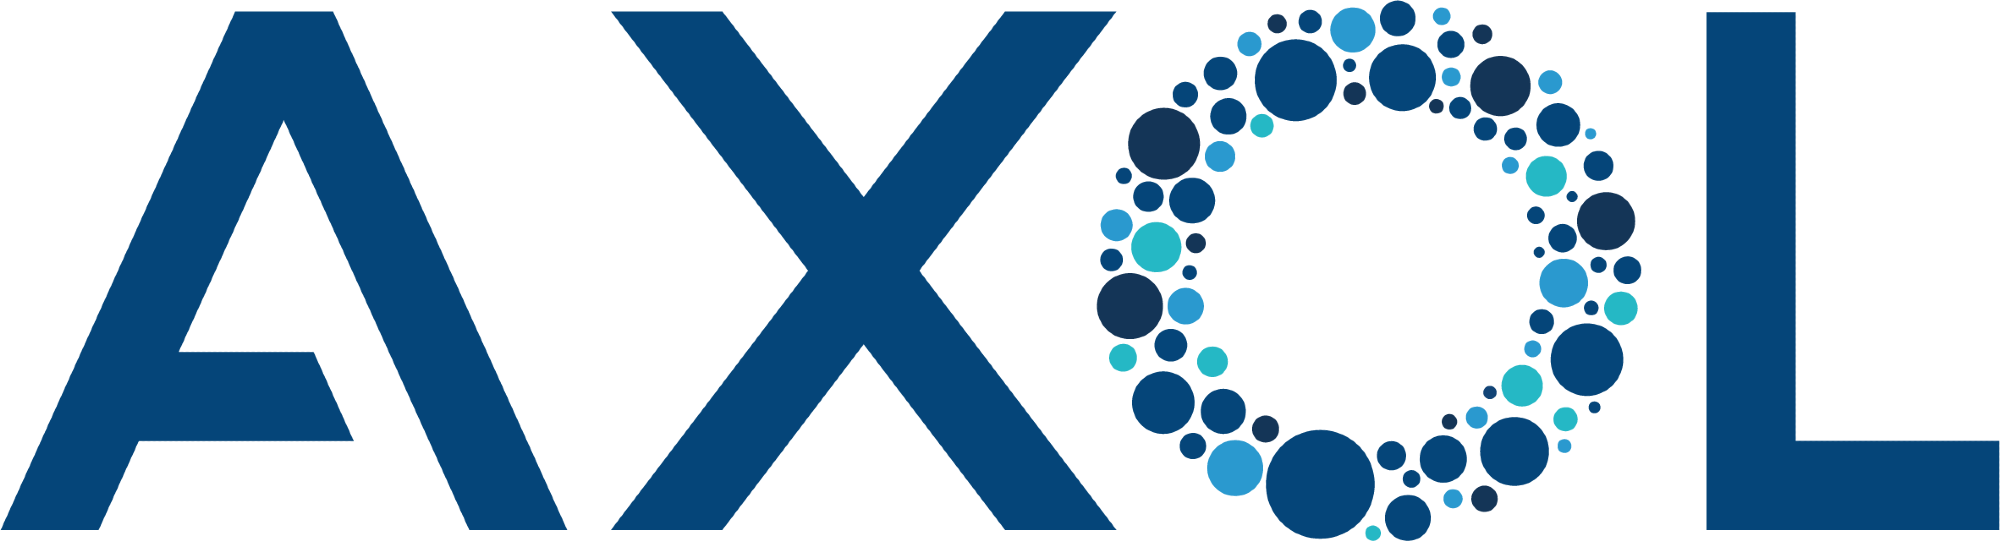 Axol Bioscience Ltd logo.